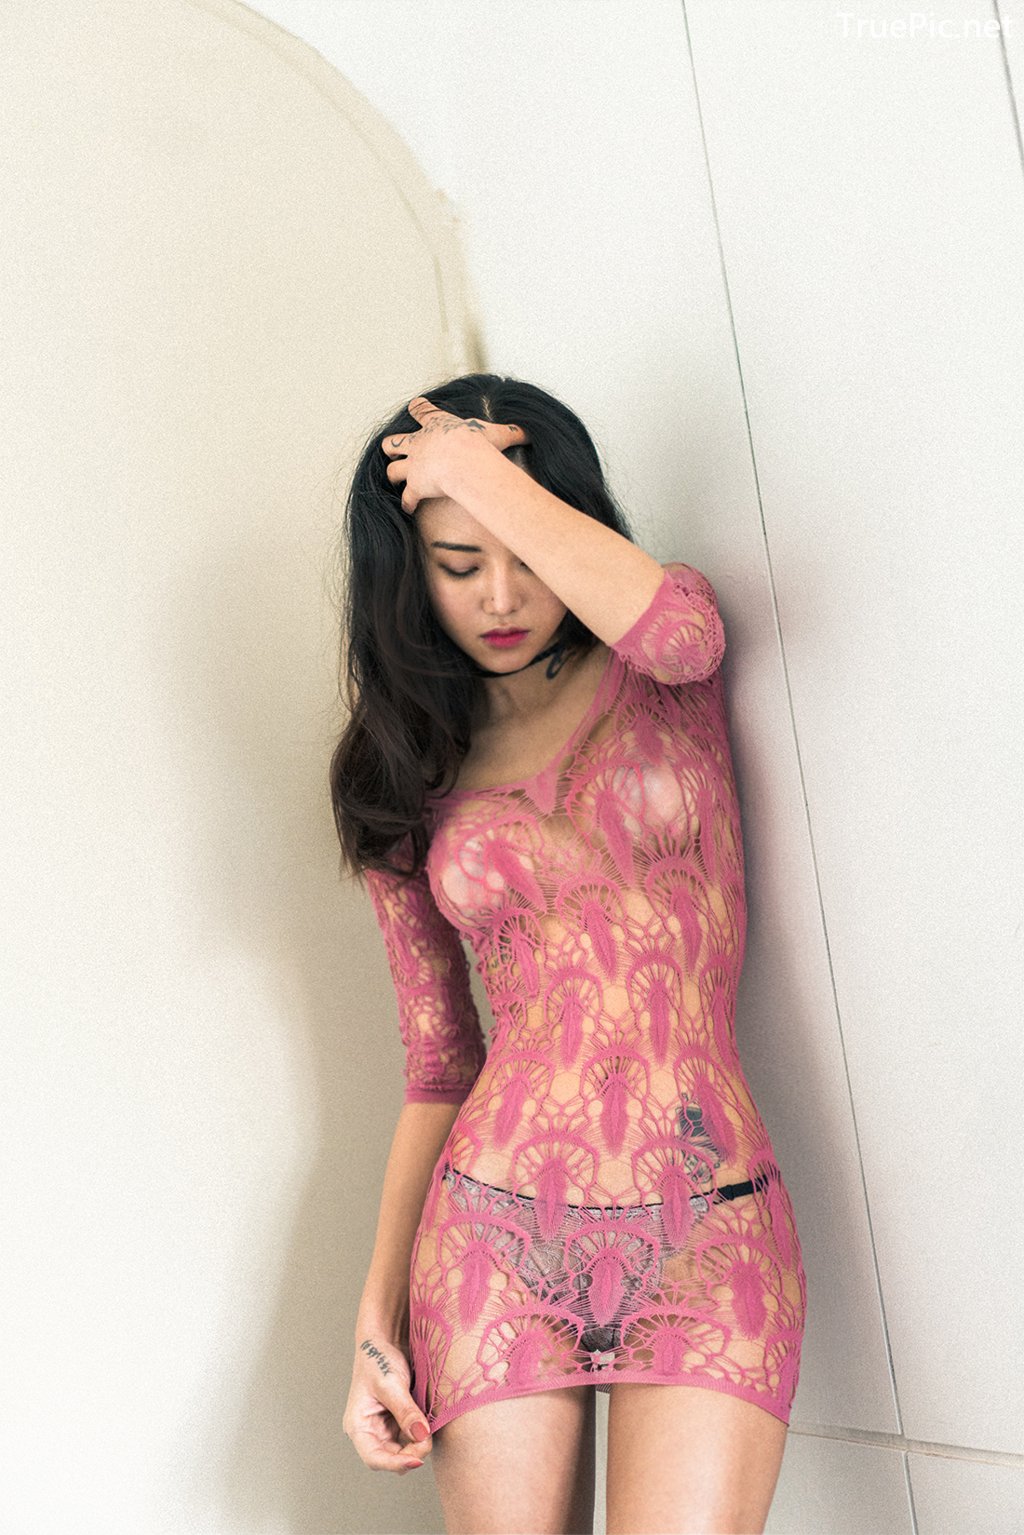 Image Korean Fashion Model – Baek Ye Jin – Sexy Lingerie Collection #3 - TruePic.net - Picture-43